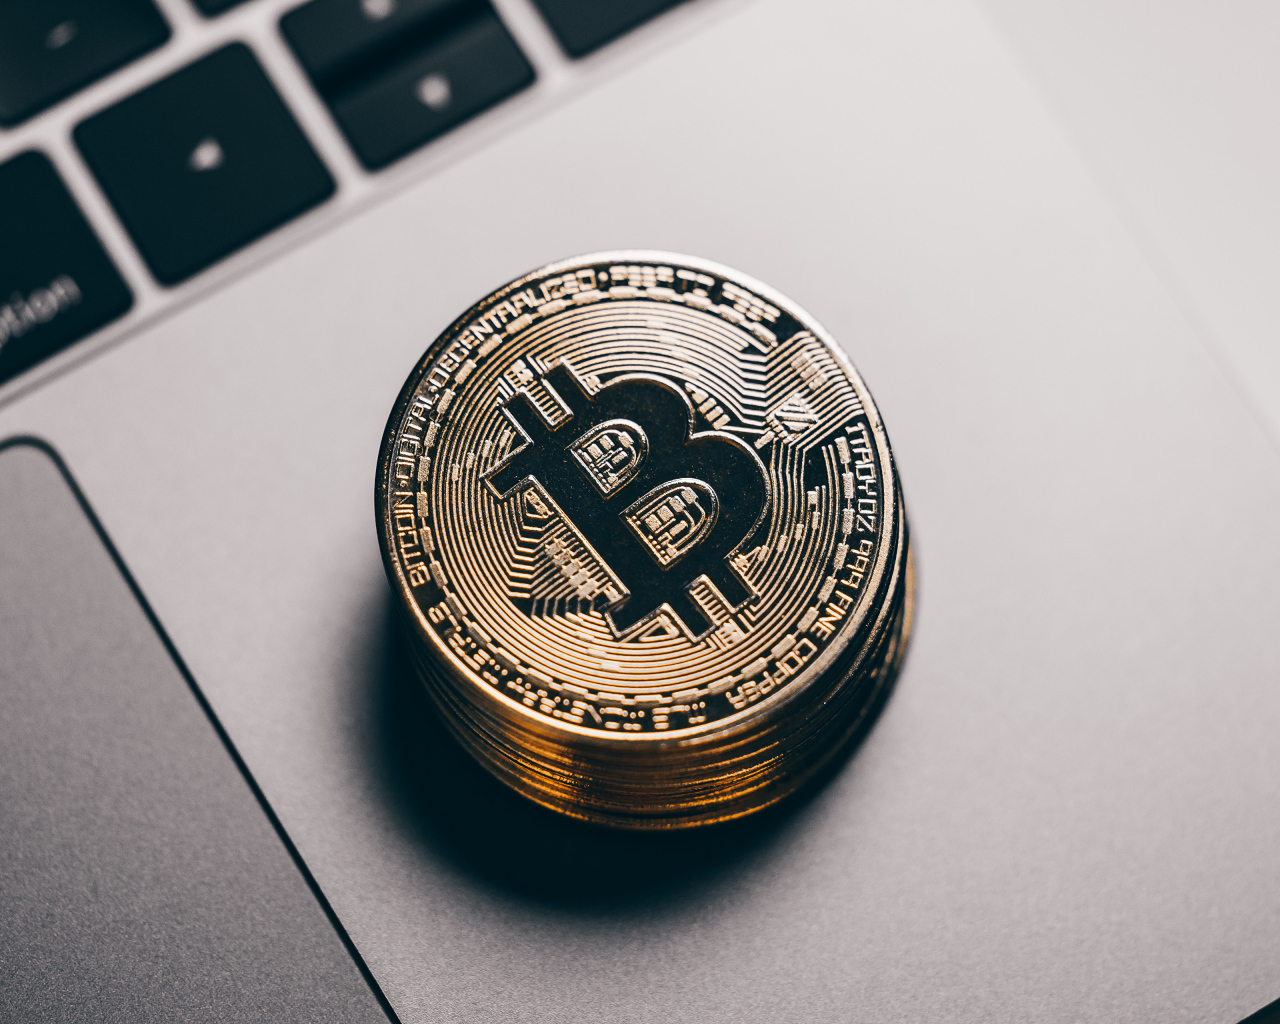 Bitcoin coins lie on a laptop